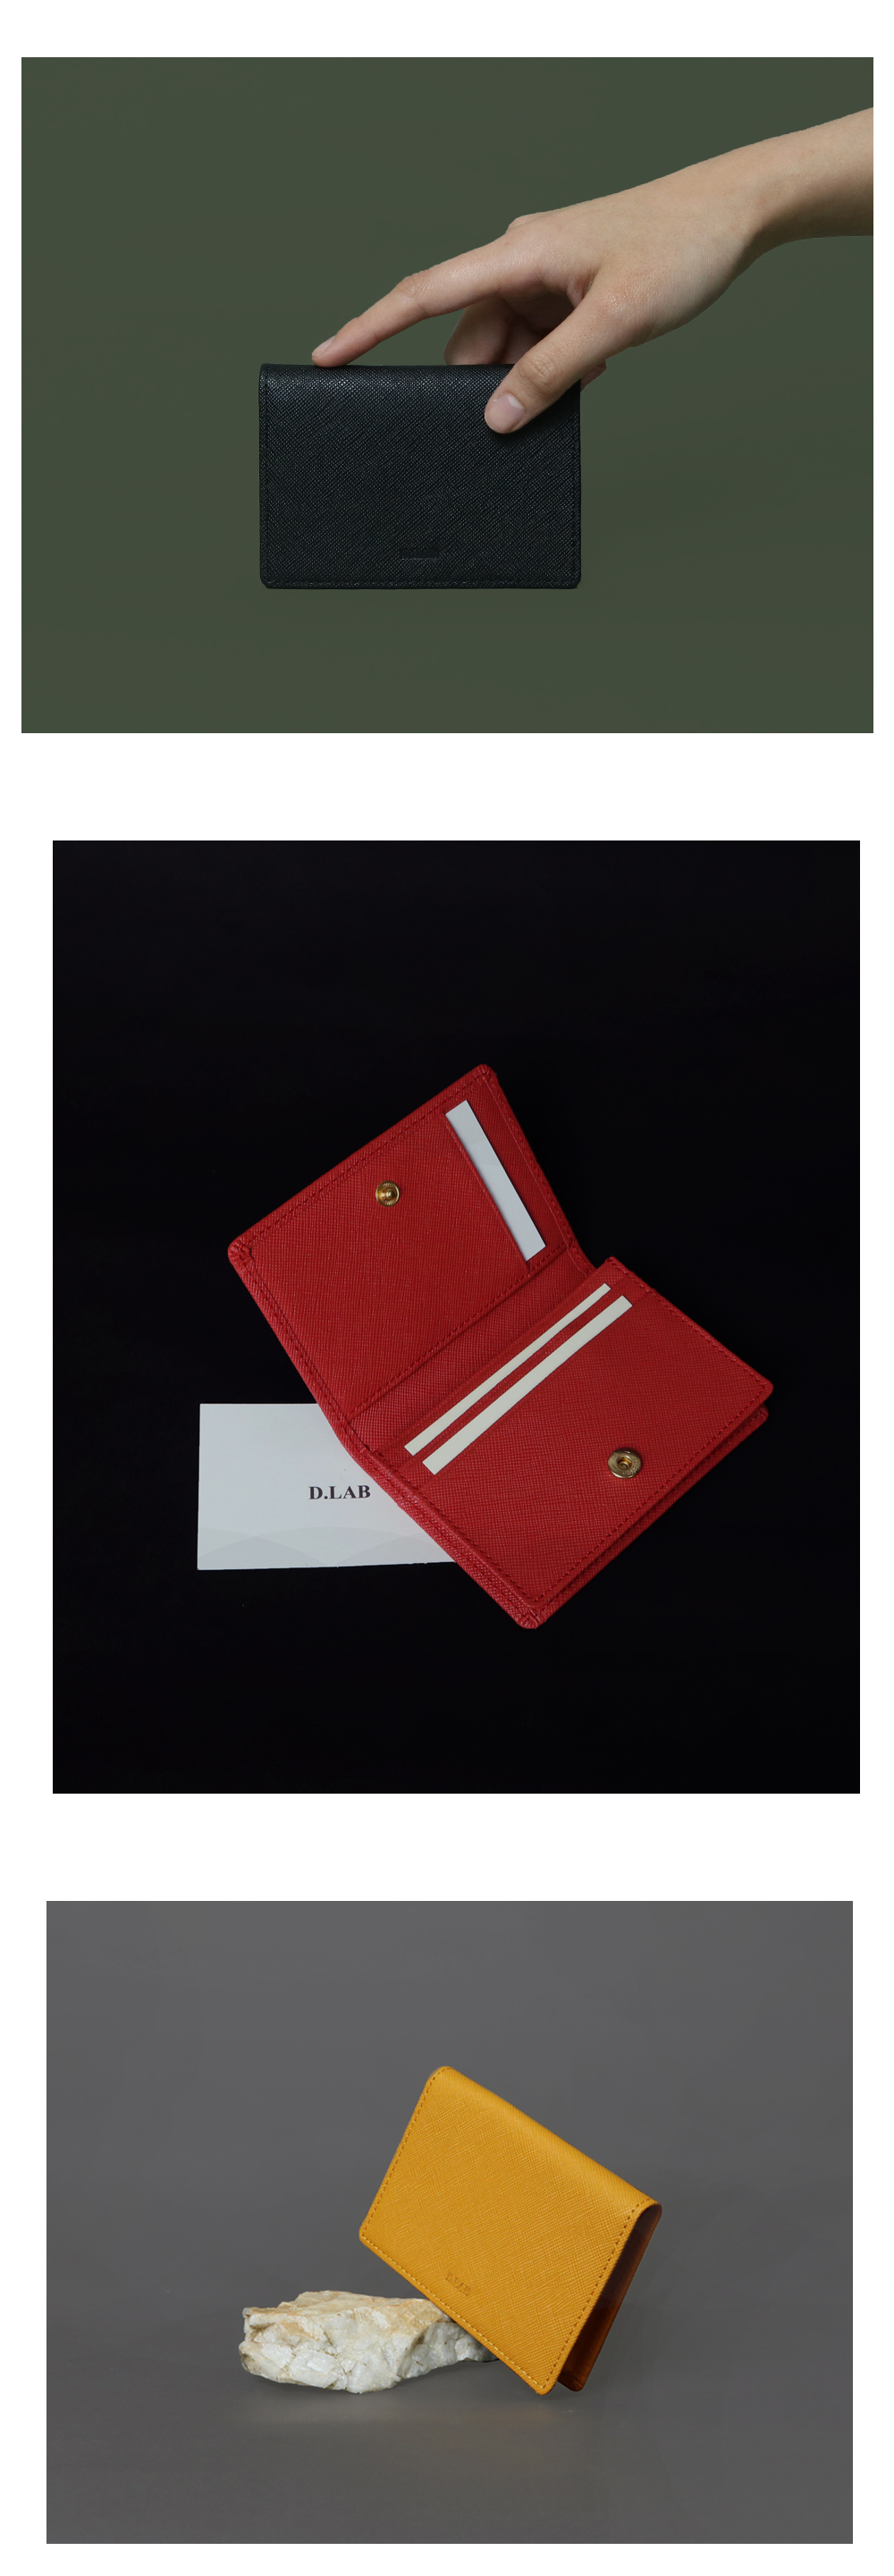 D.LAB Basic Leather Namecard wallet - 5colors 32,000원 - 디랩 패션잡화, 지갑, 명함지갑, 천연가죽 바보사랑 D.LAB Basic Leather Namecard wallet - 5colors 32,000원 - 디랩 패션잡화, 지갑, 명함지갑, 천연가죽 바보사랑